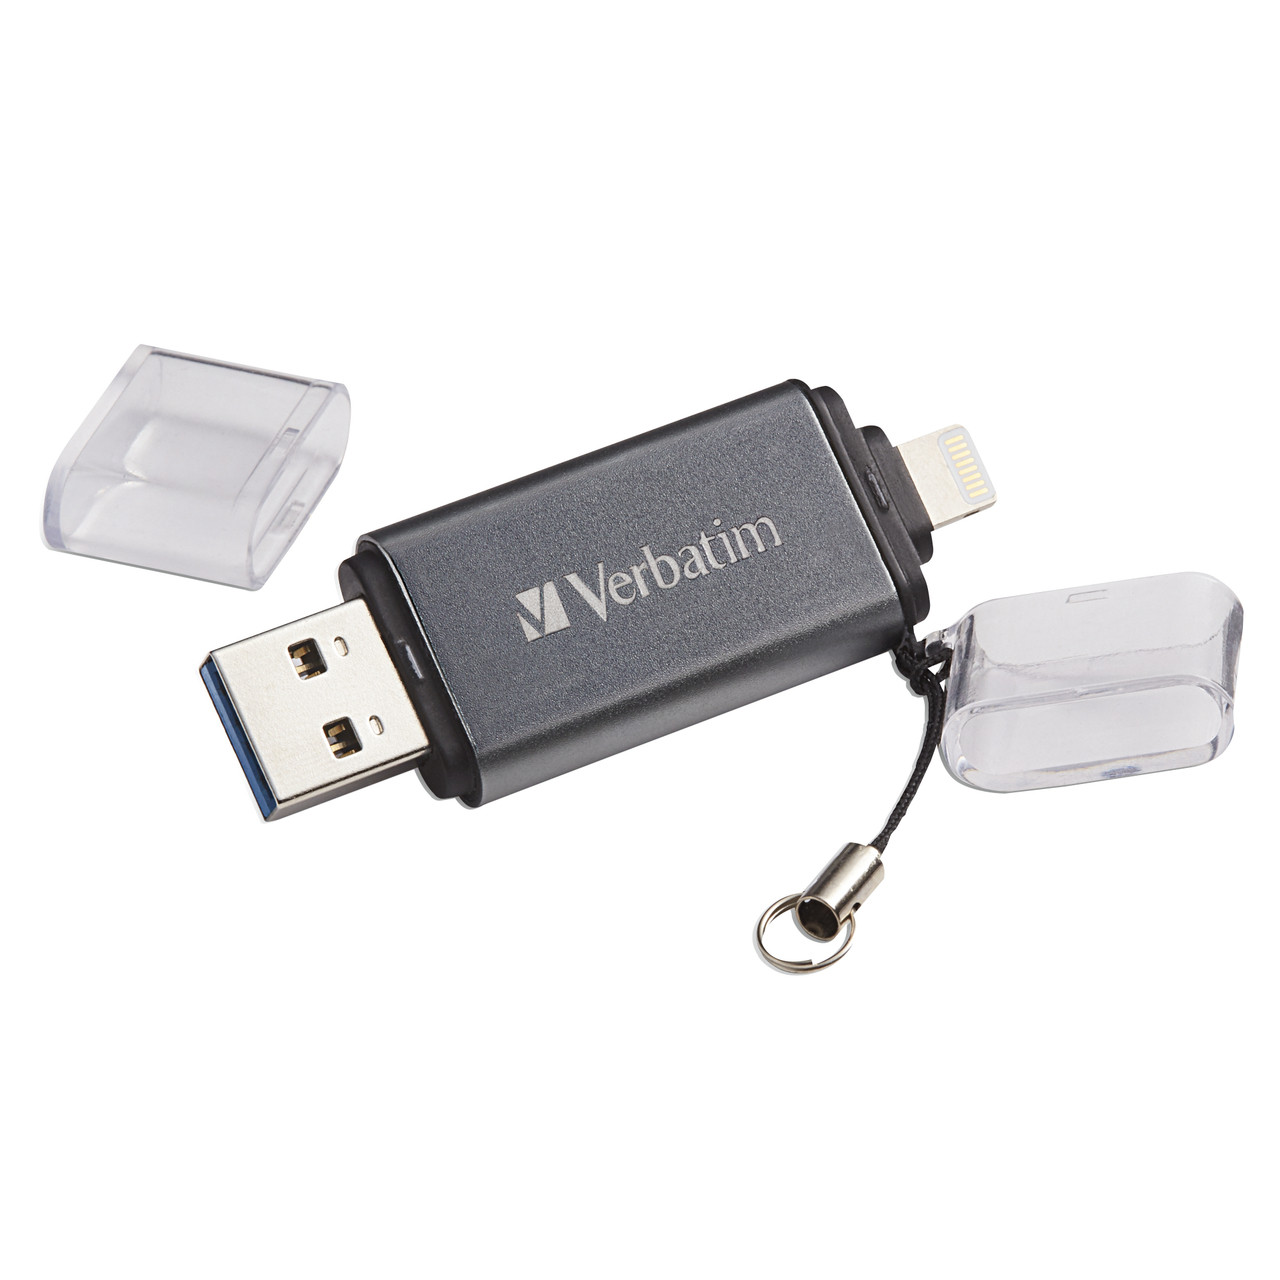 Verbatim iStore 'n' Go 32GB USB 3.0 (3.1 Gen 1) Capacity Grey USB flash drive